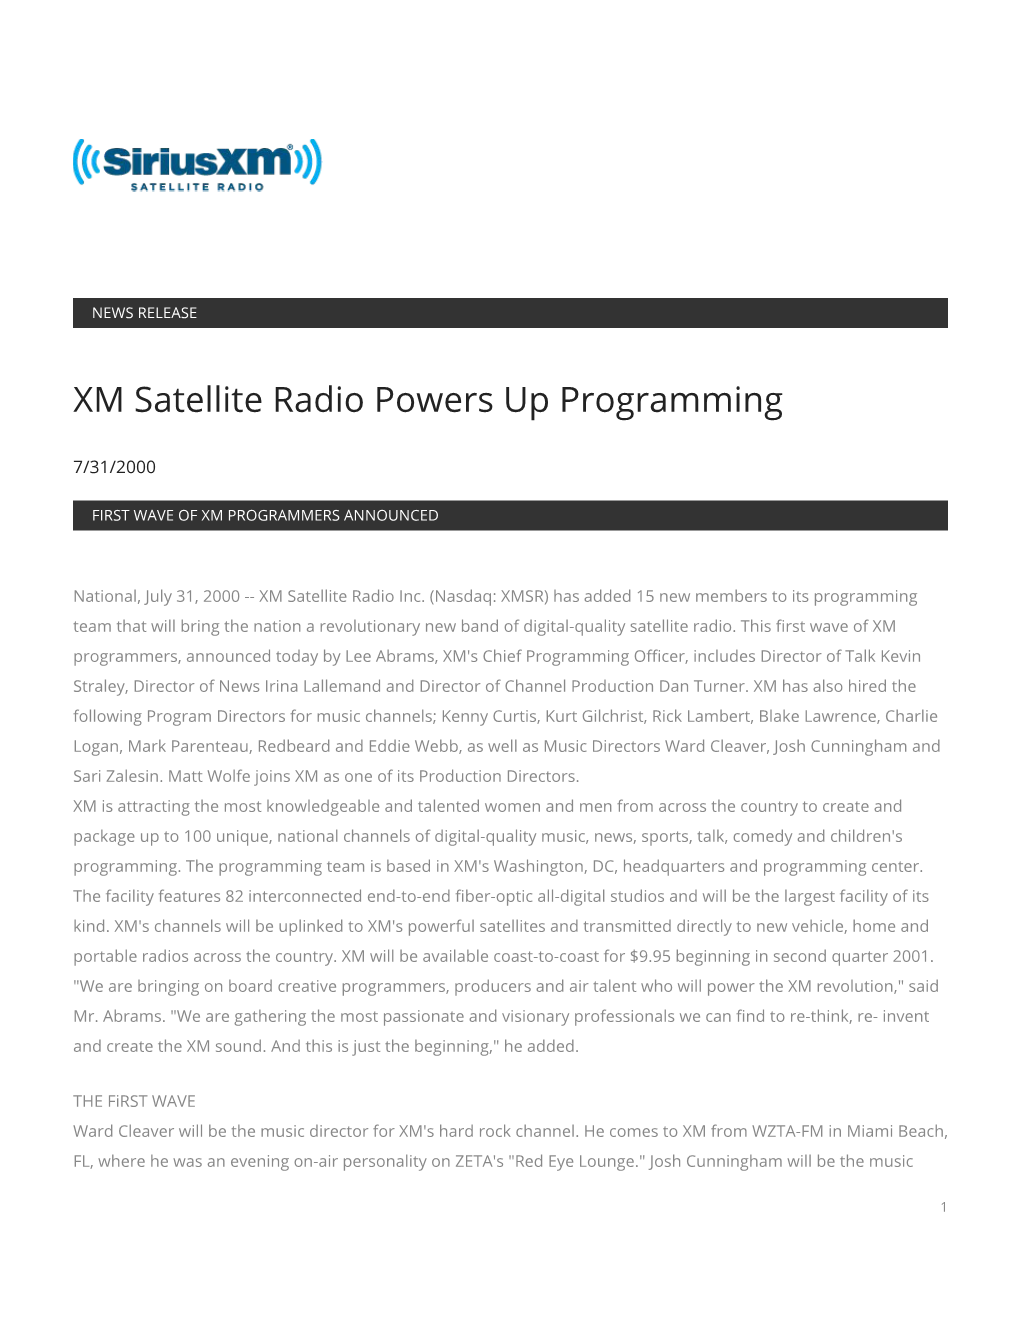 XM Satellite Radio Powers up Programming